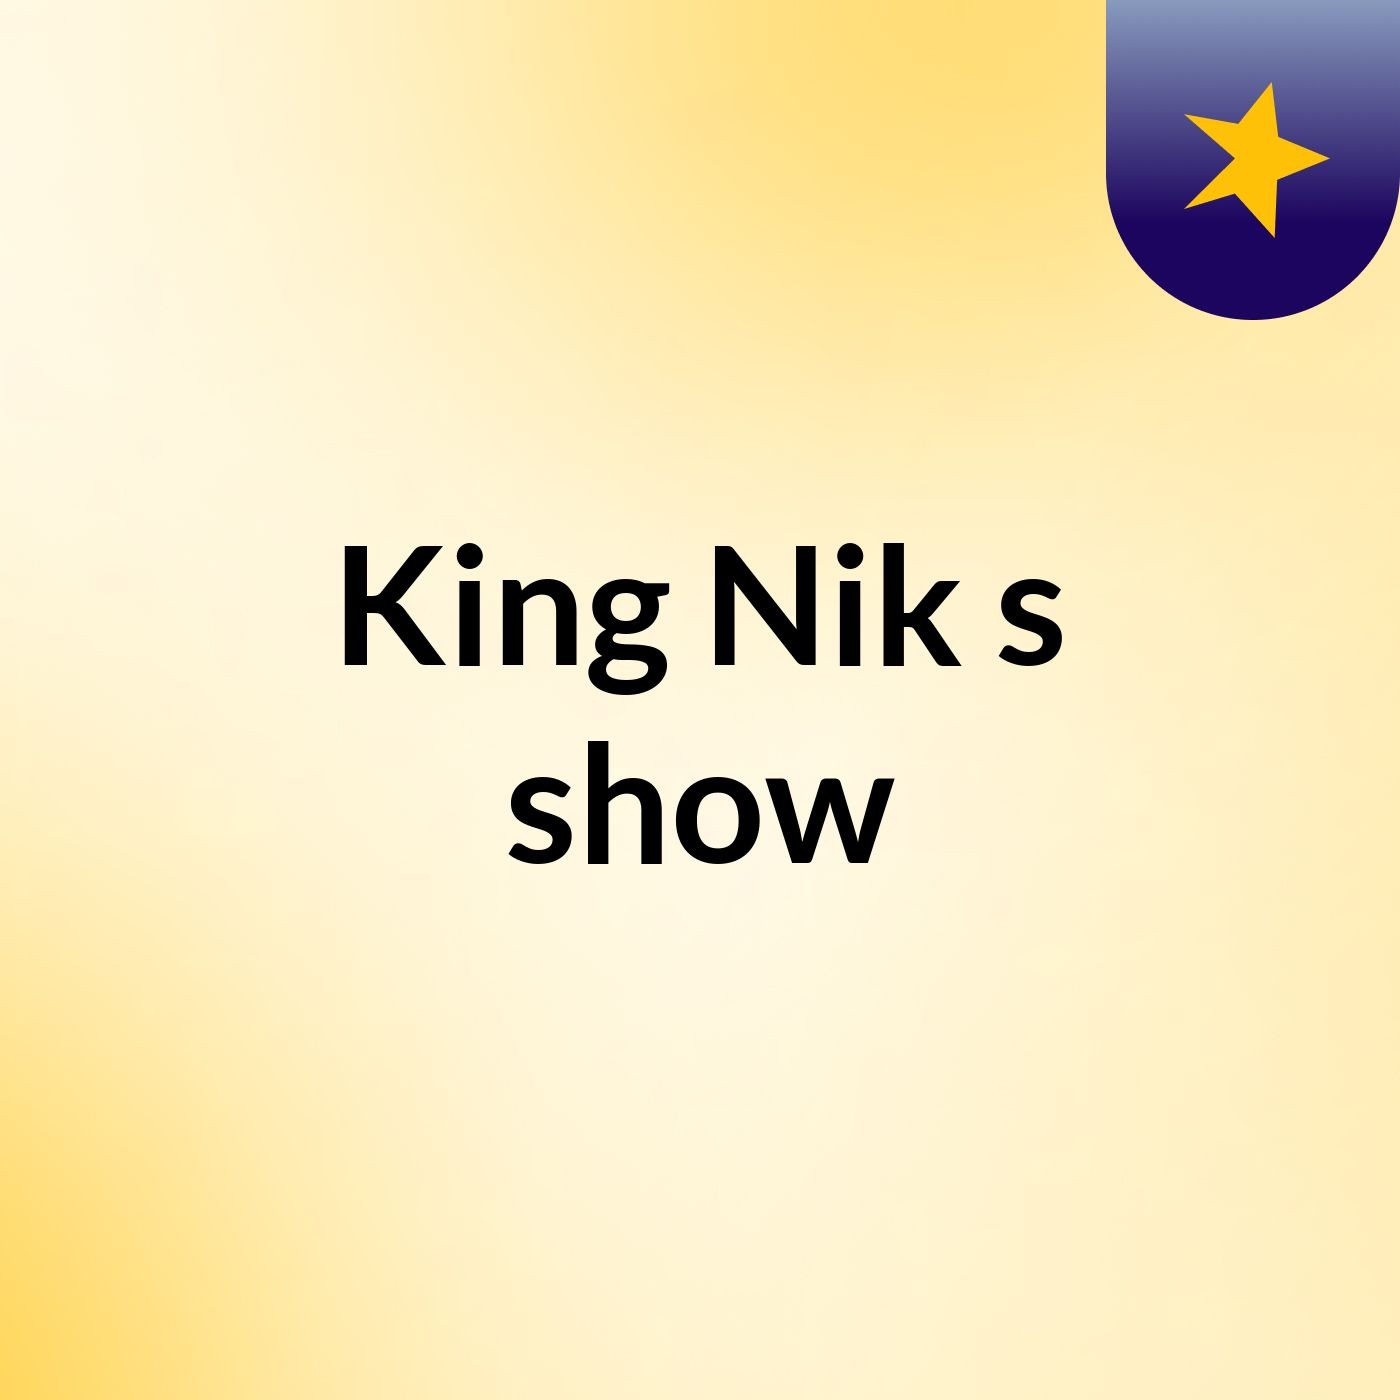 King Nik's show